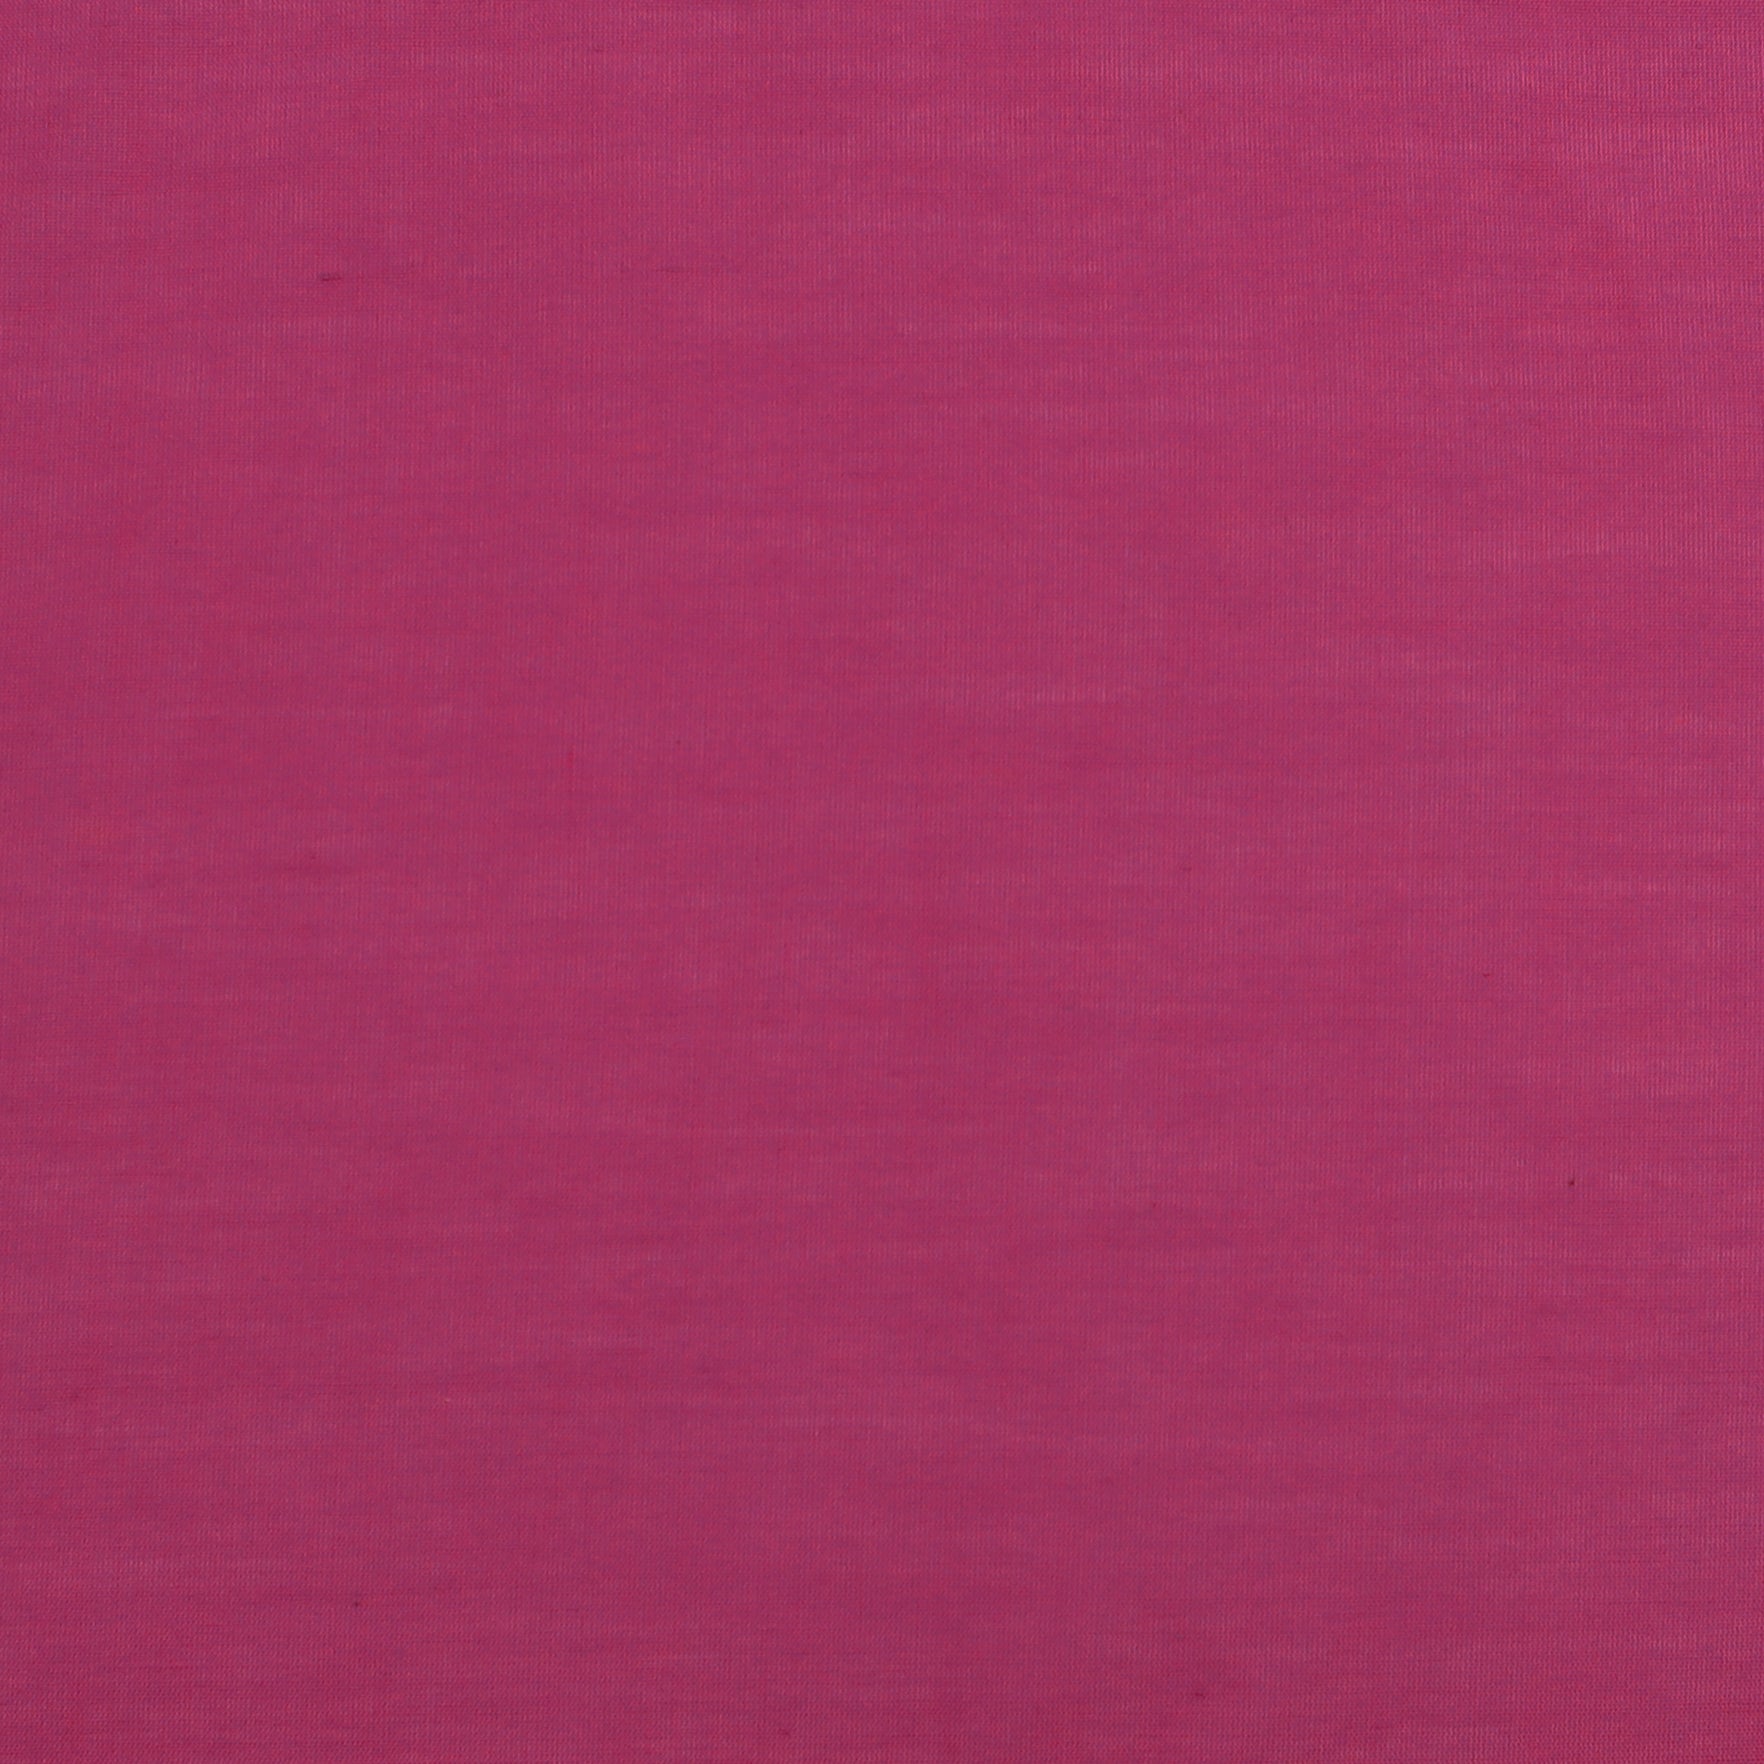 Lightweight Voile in Rosé (Pink)